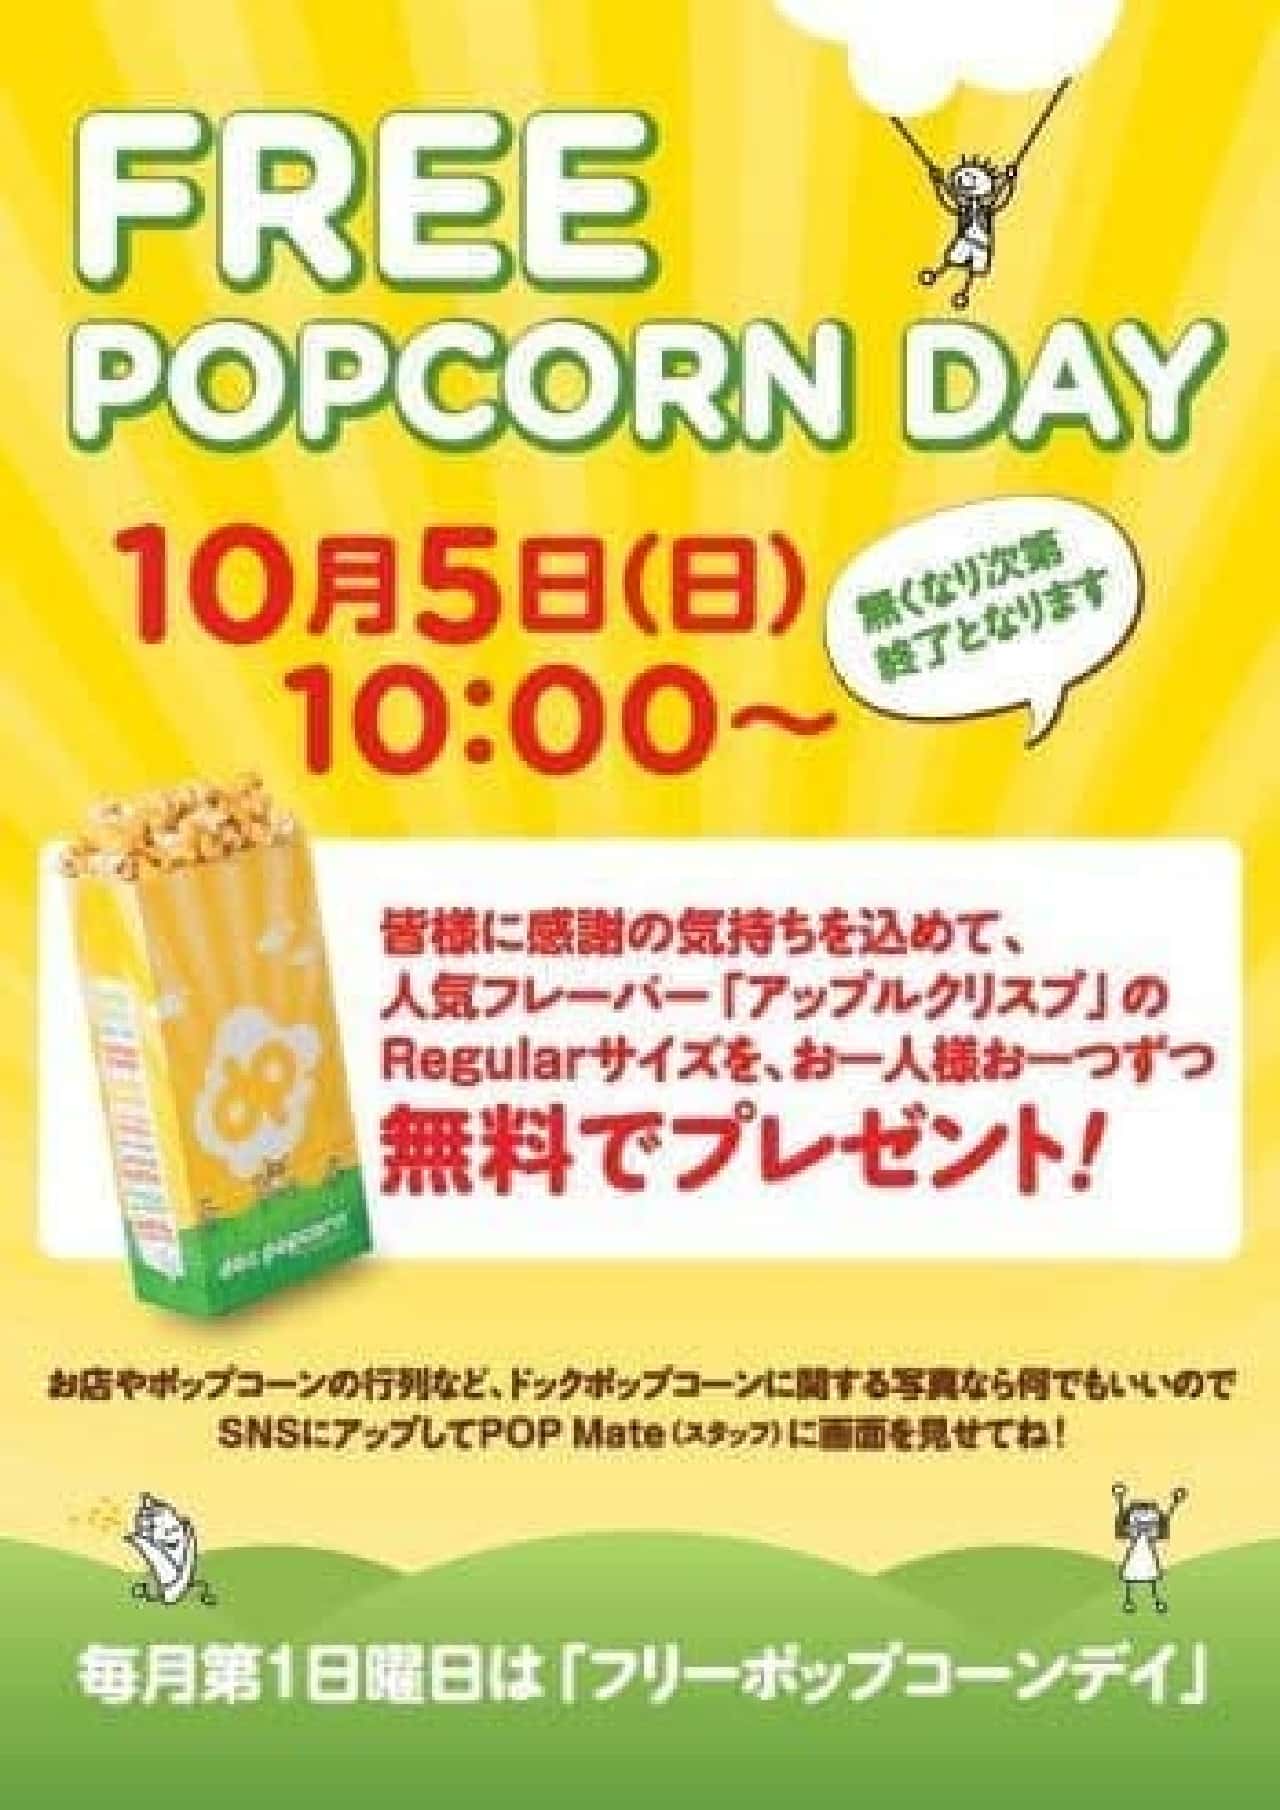 October's free popcorn is "Apple Crisp"!